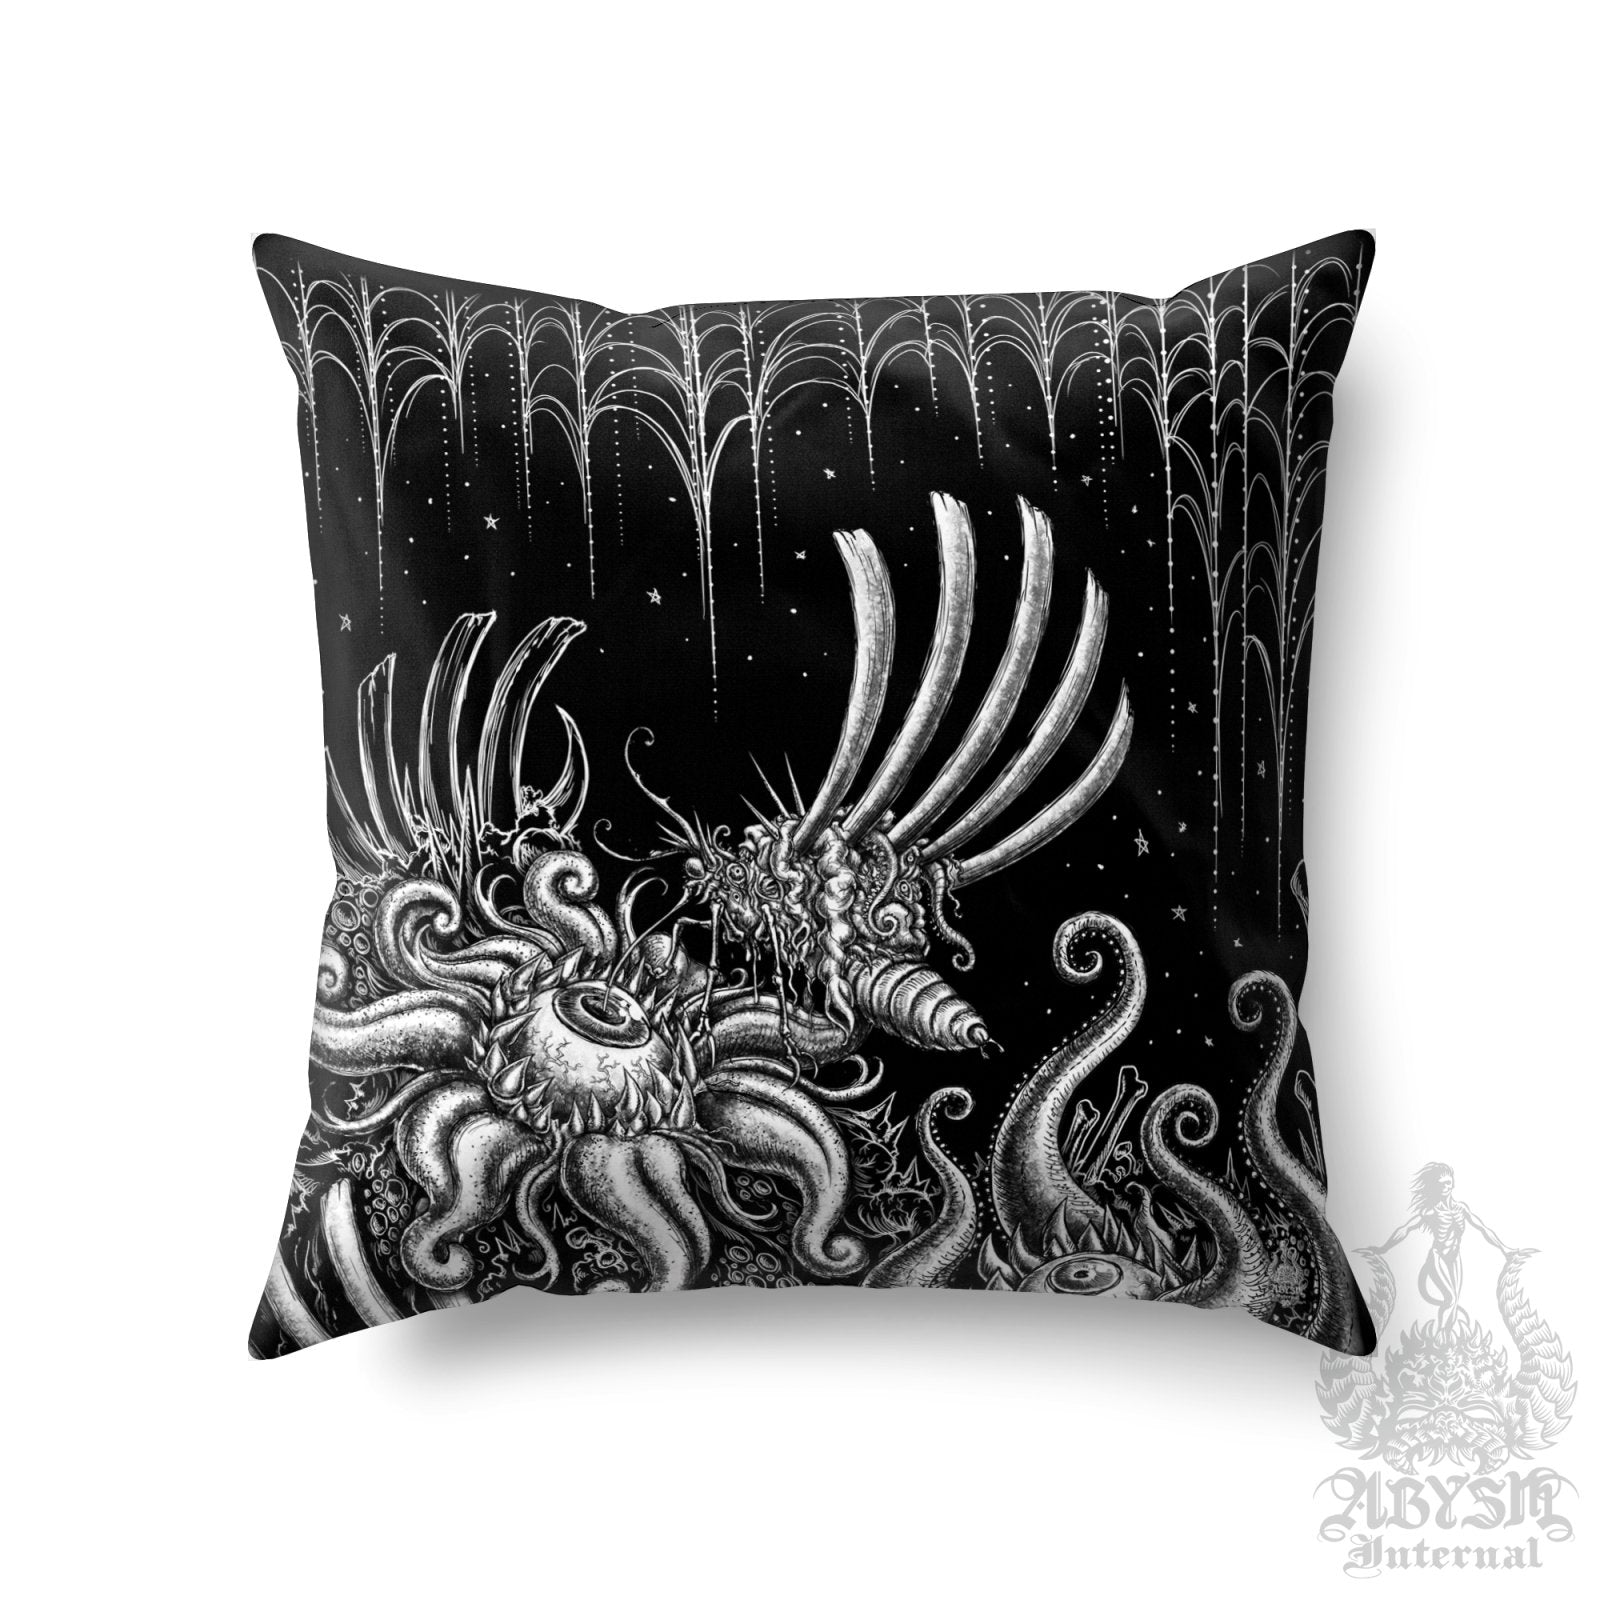 Gothic Throw Pillow, Decorative Accent Cushion, Goth Room Decor, Dark Art, Alternative Home - Bloodfly - Abysm Internal